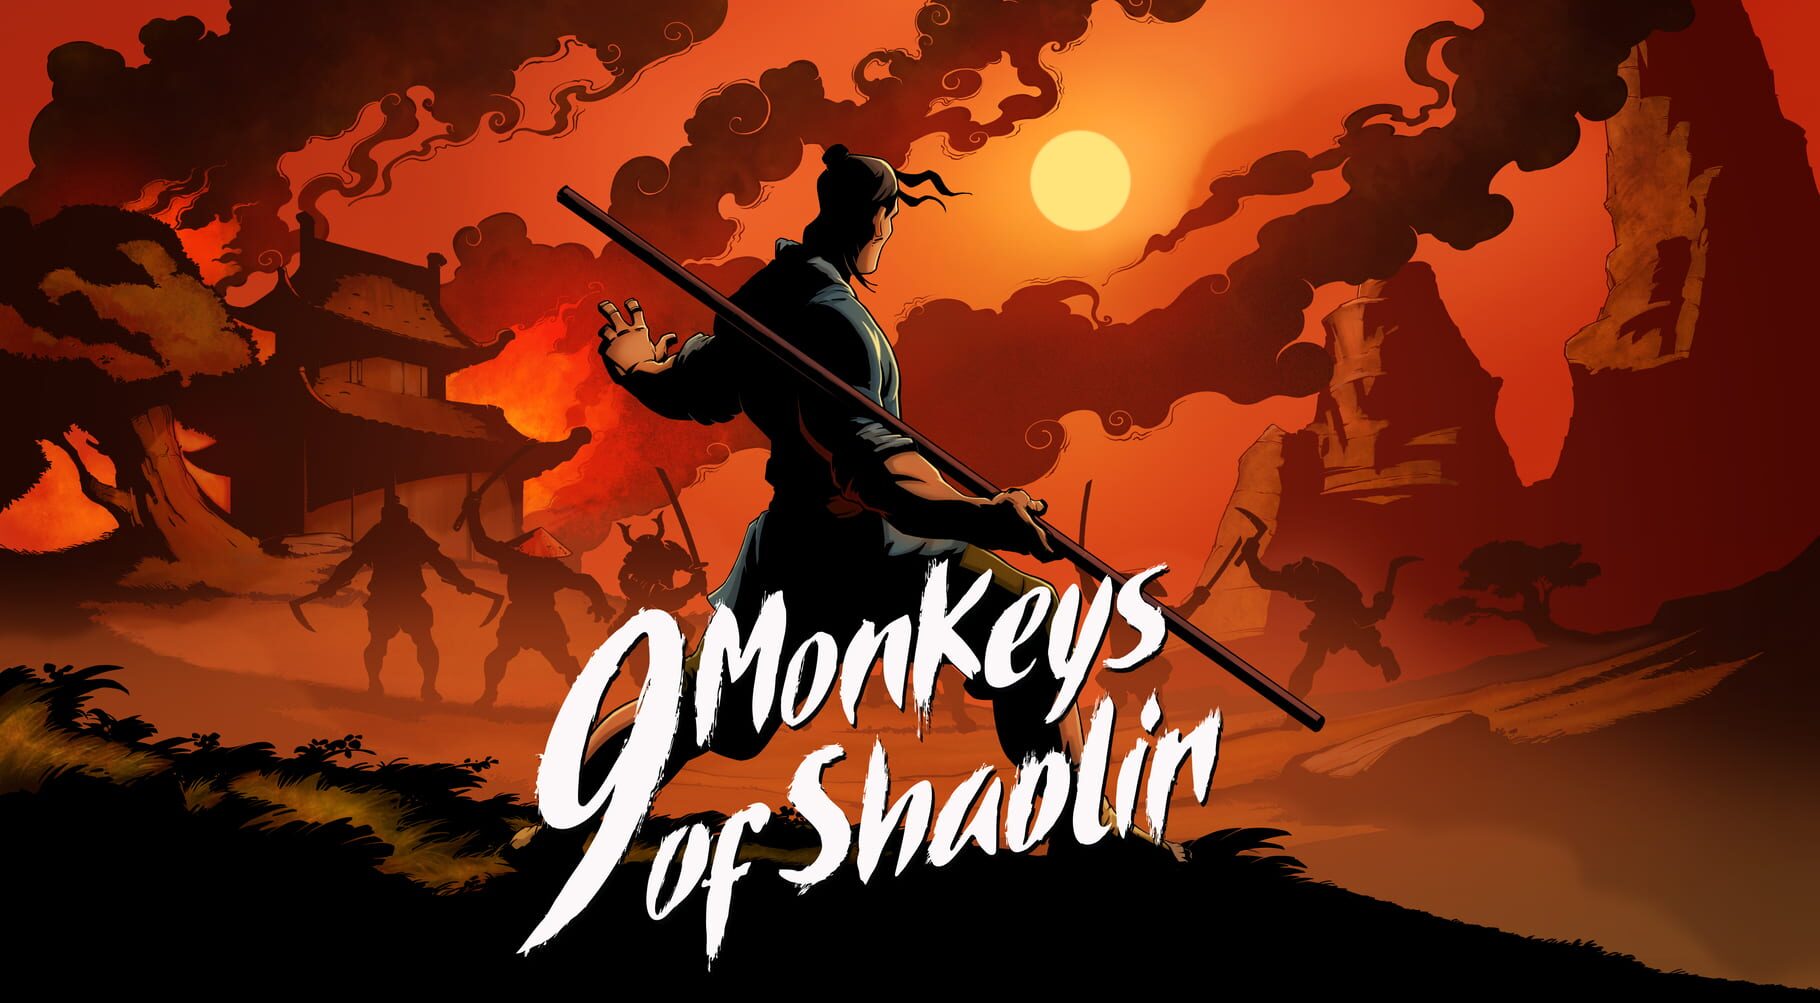 9 Monkeys of Shaolin artwork